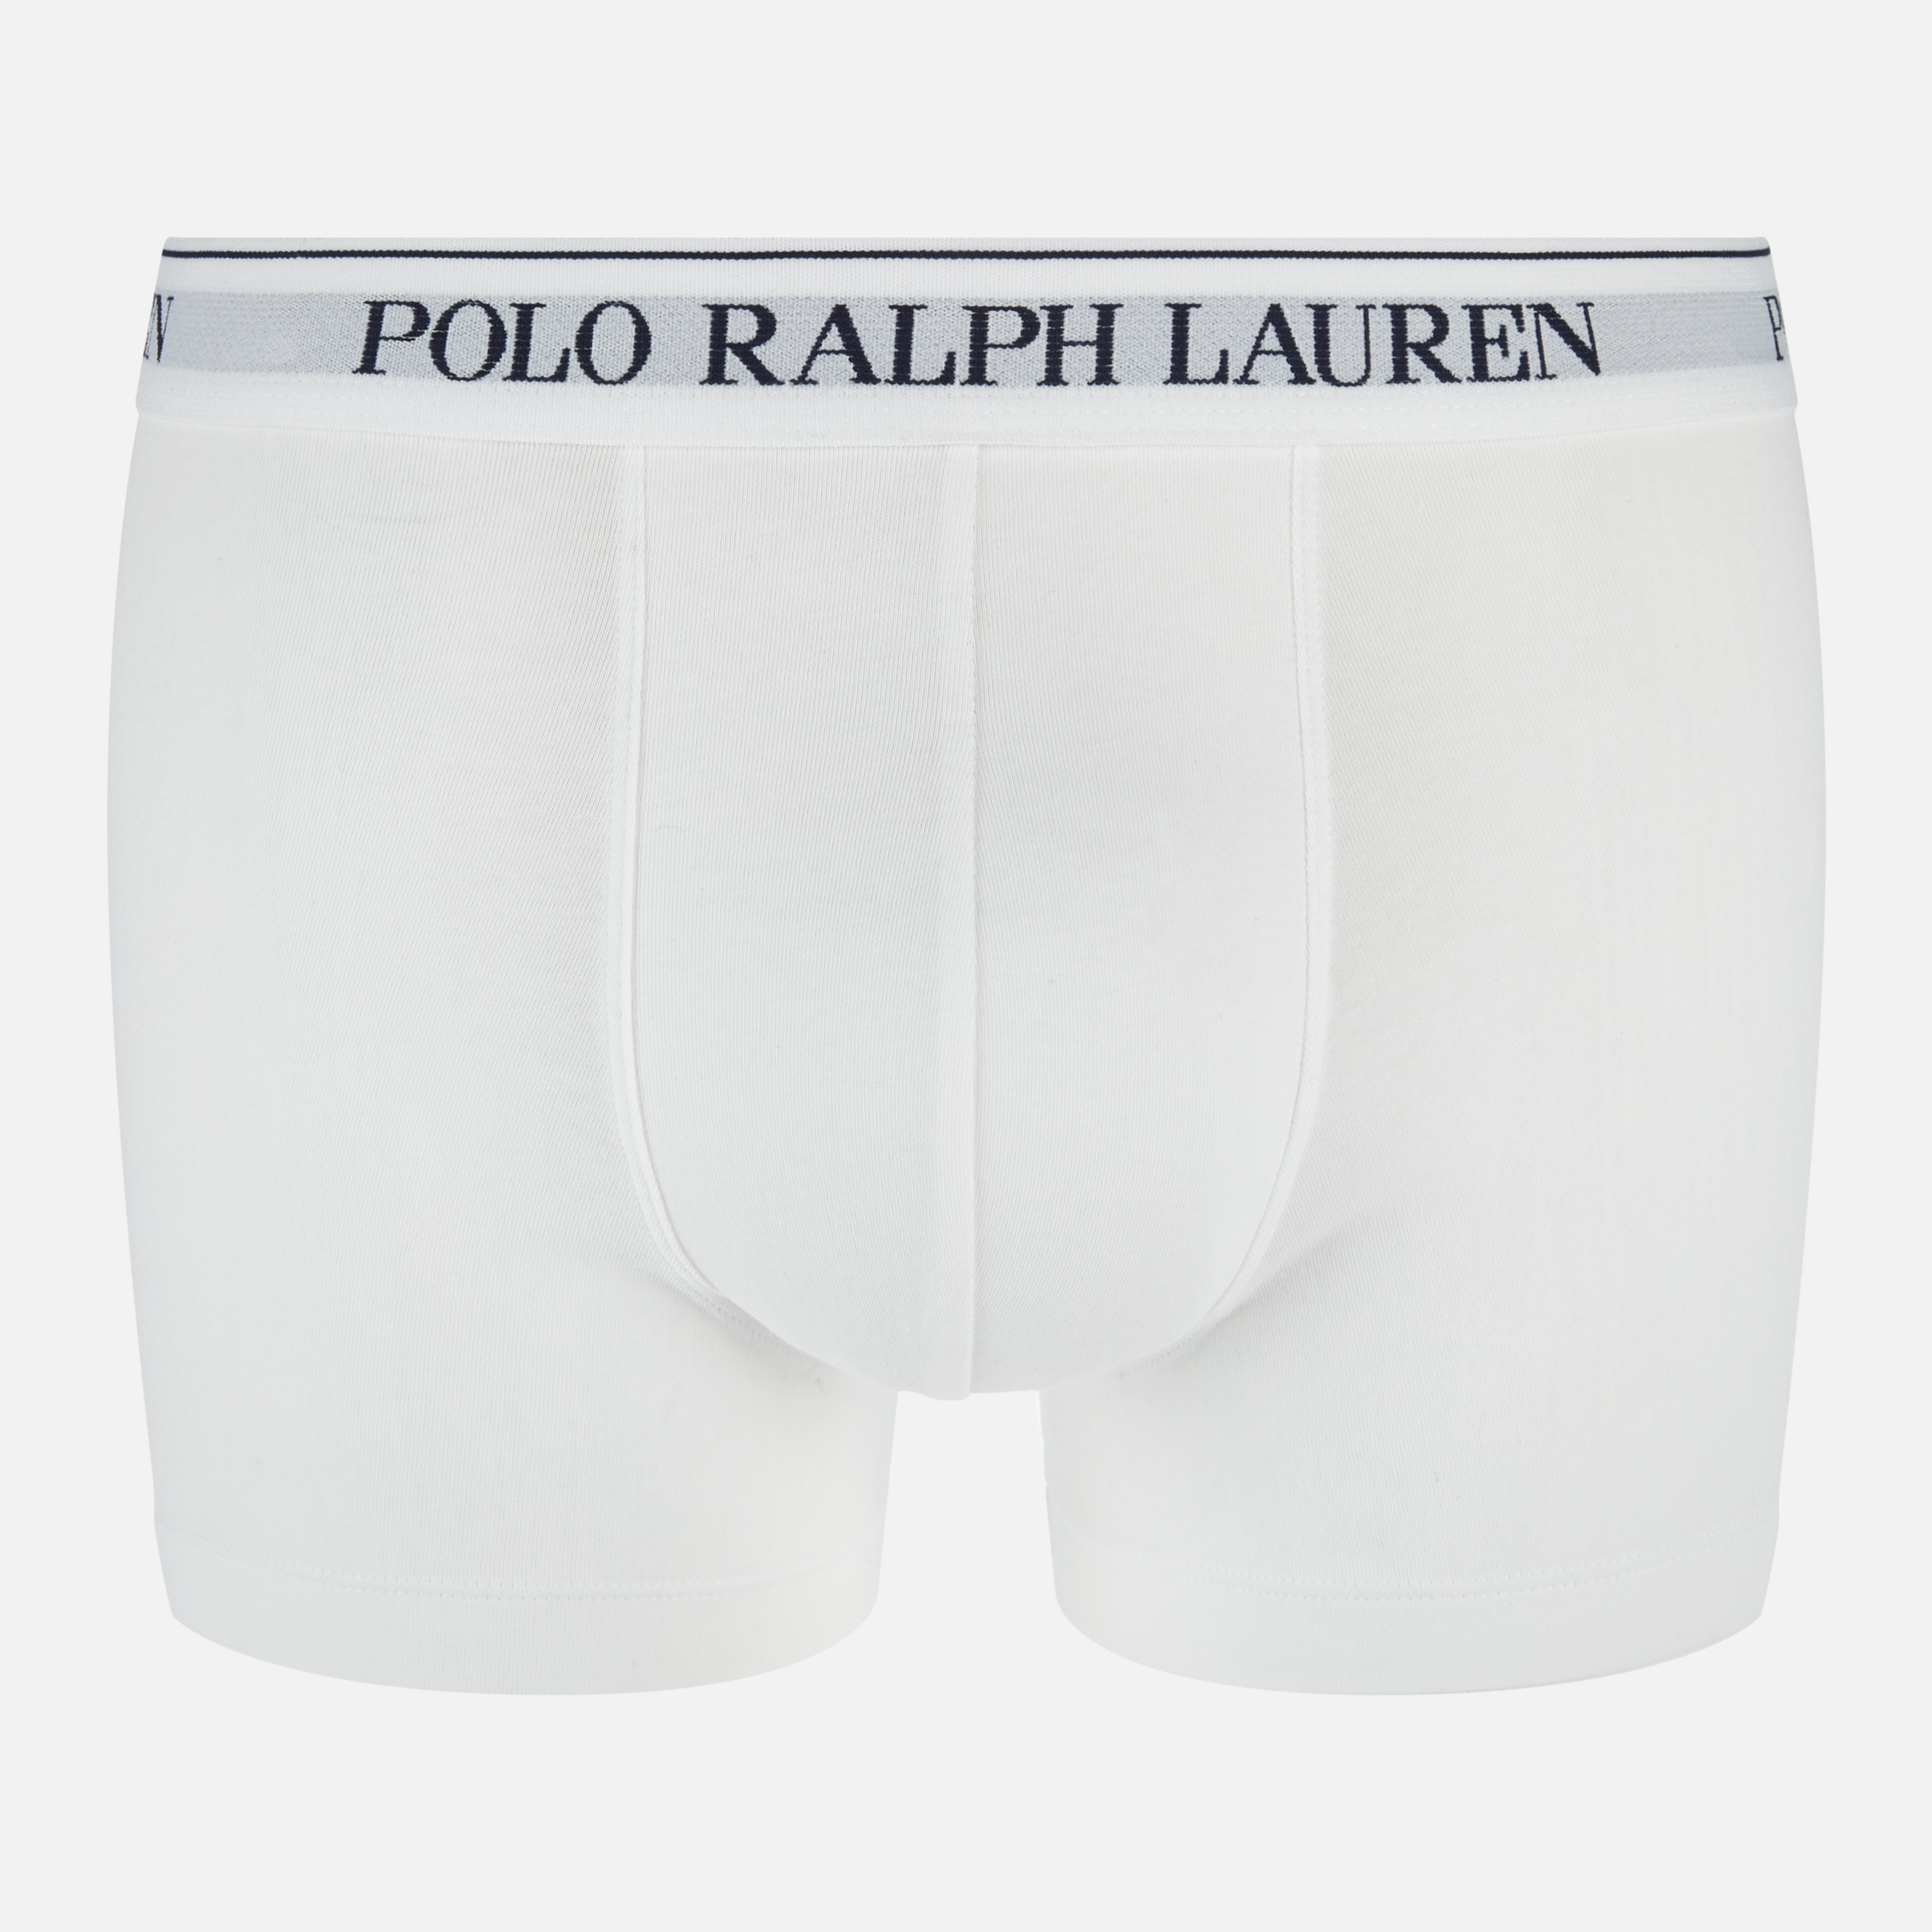 Polo Ralph Lauren hanes Men's White Brief Waist 36 EUC RN15763